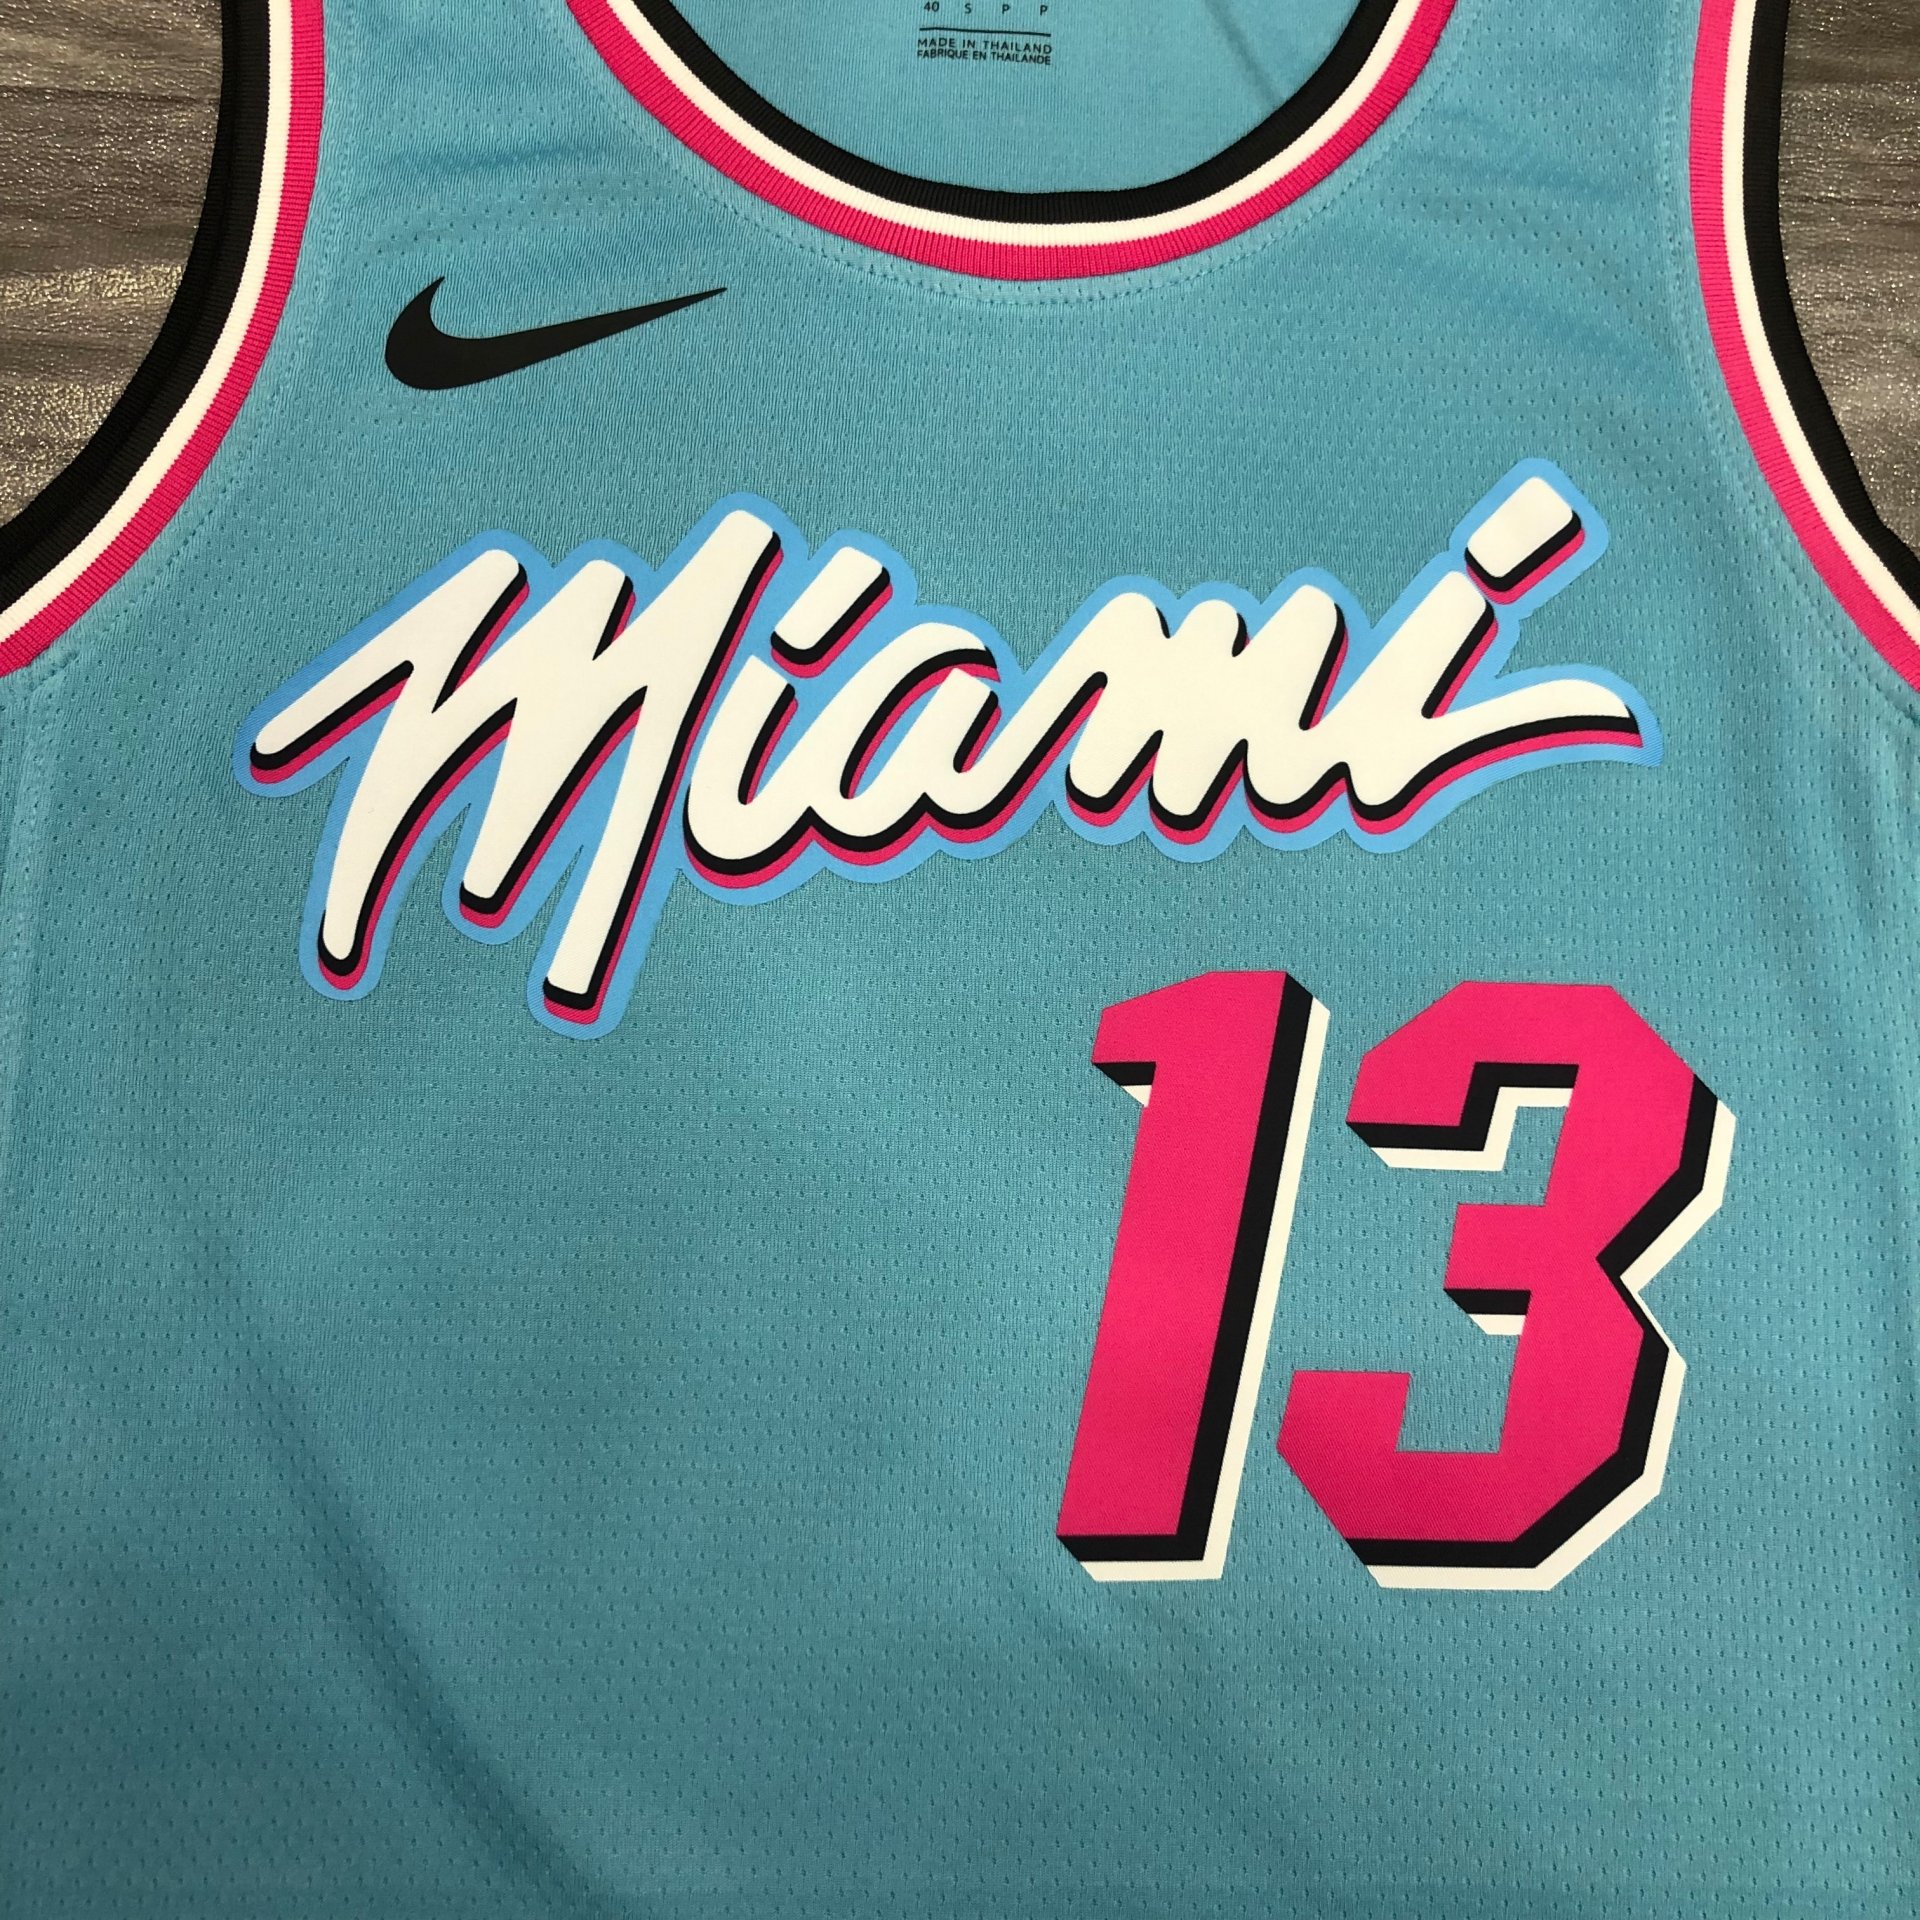 Bam Ado - Miami Heat *VICE - Pink* #13 - JerseyAve - Marketplace